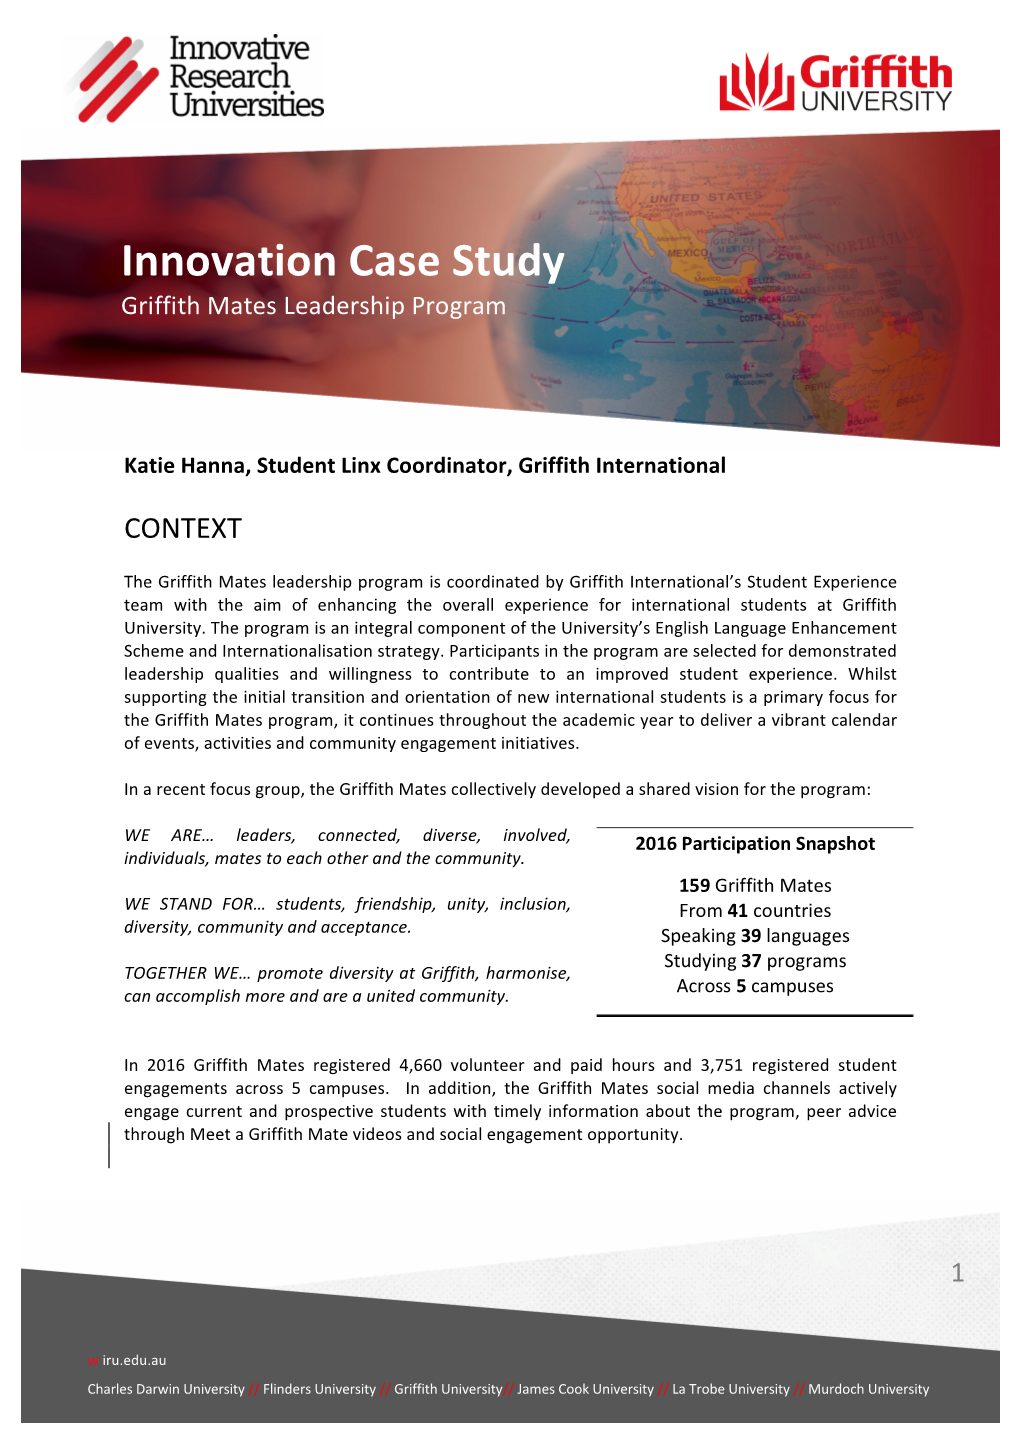 Innovation Case Study Griffith Mates Leadership Program